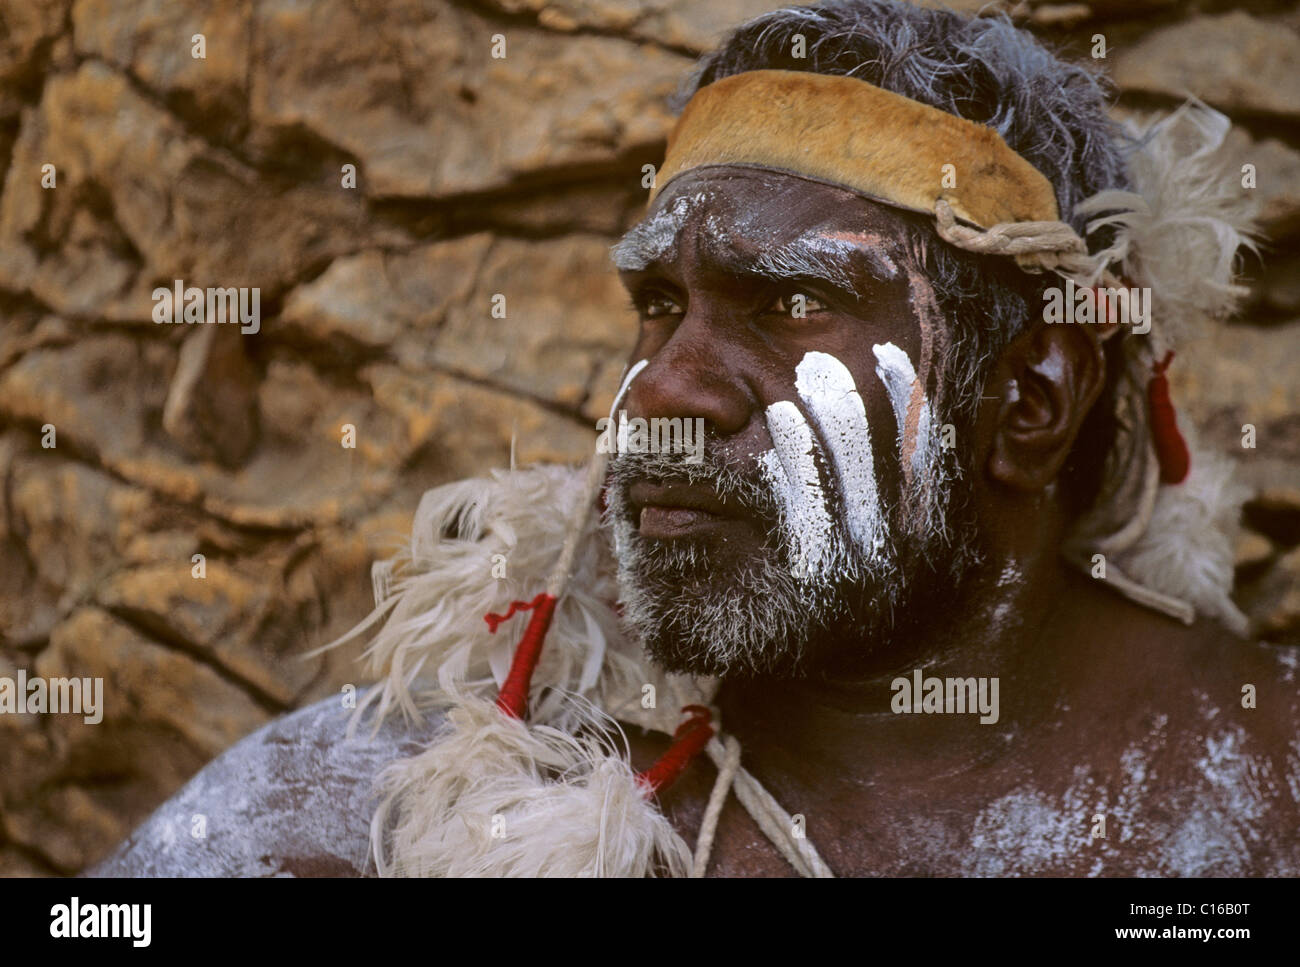 Aborigine, indegenous people of Australia, Northern Territory, Australia Stock Photo